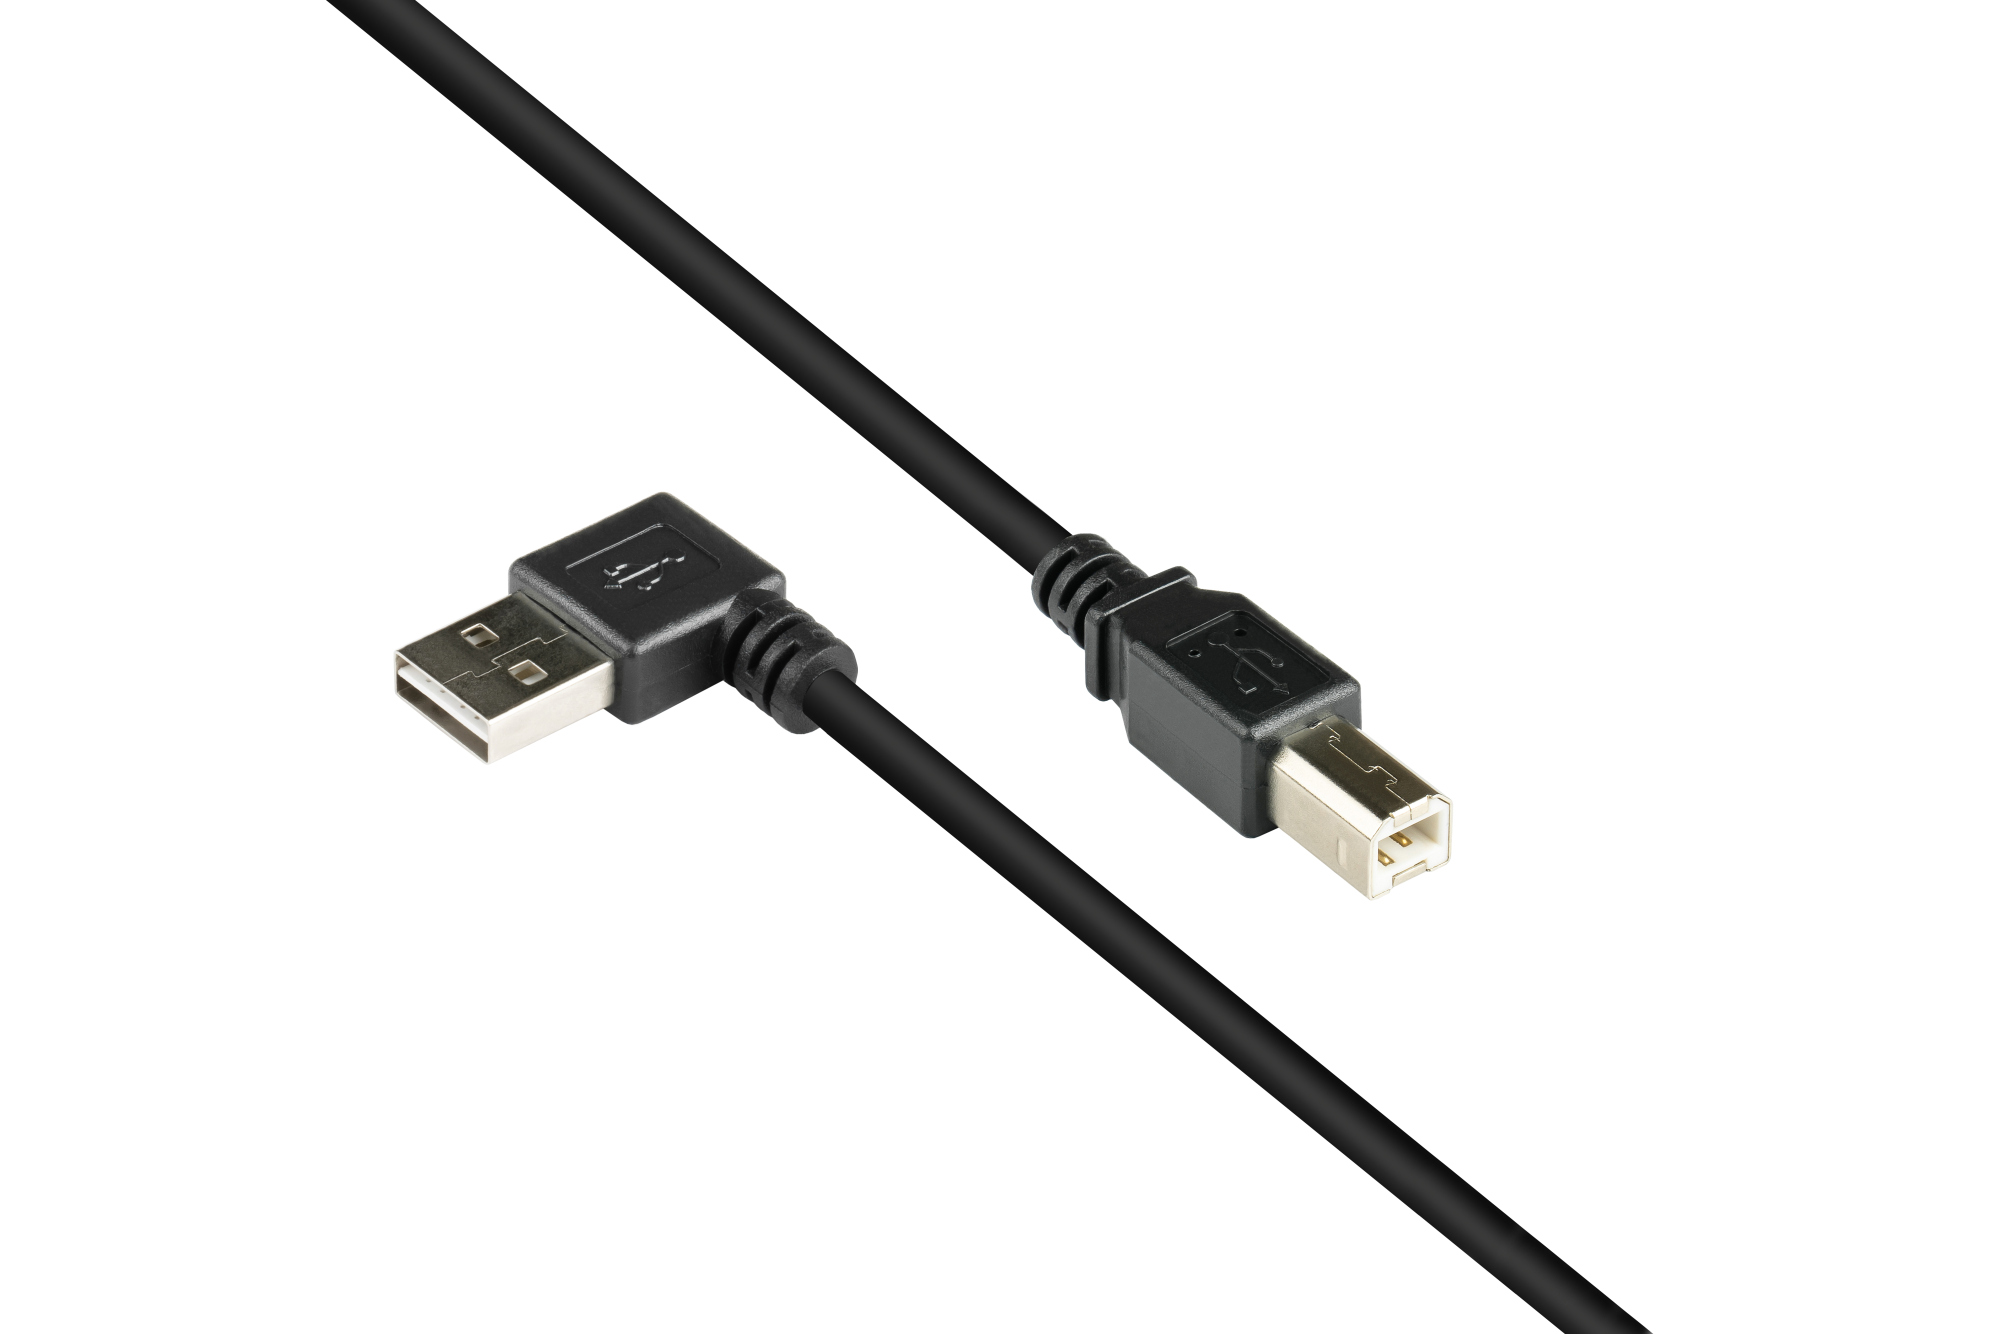 Anschlusskabel USB 2.0 EASY Stecker A gewinkelt an Stecker B, schwarz, 1m